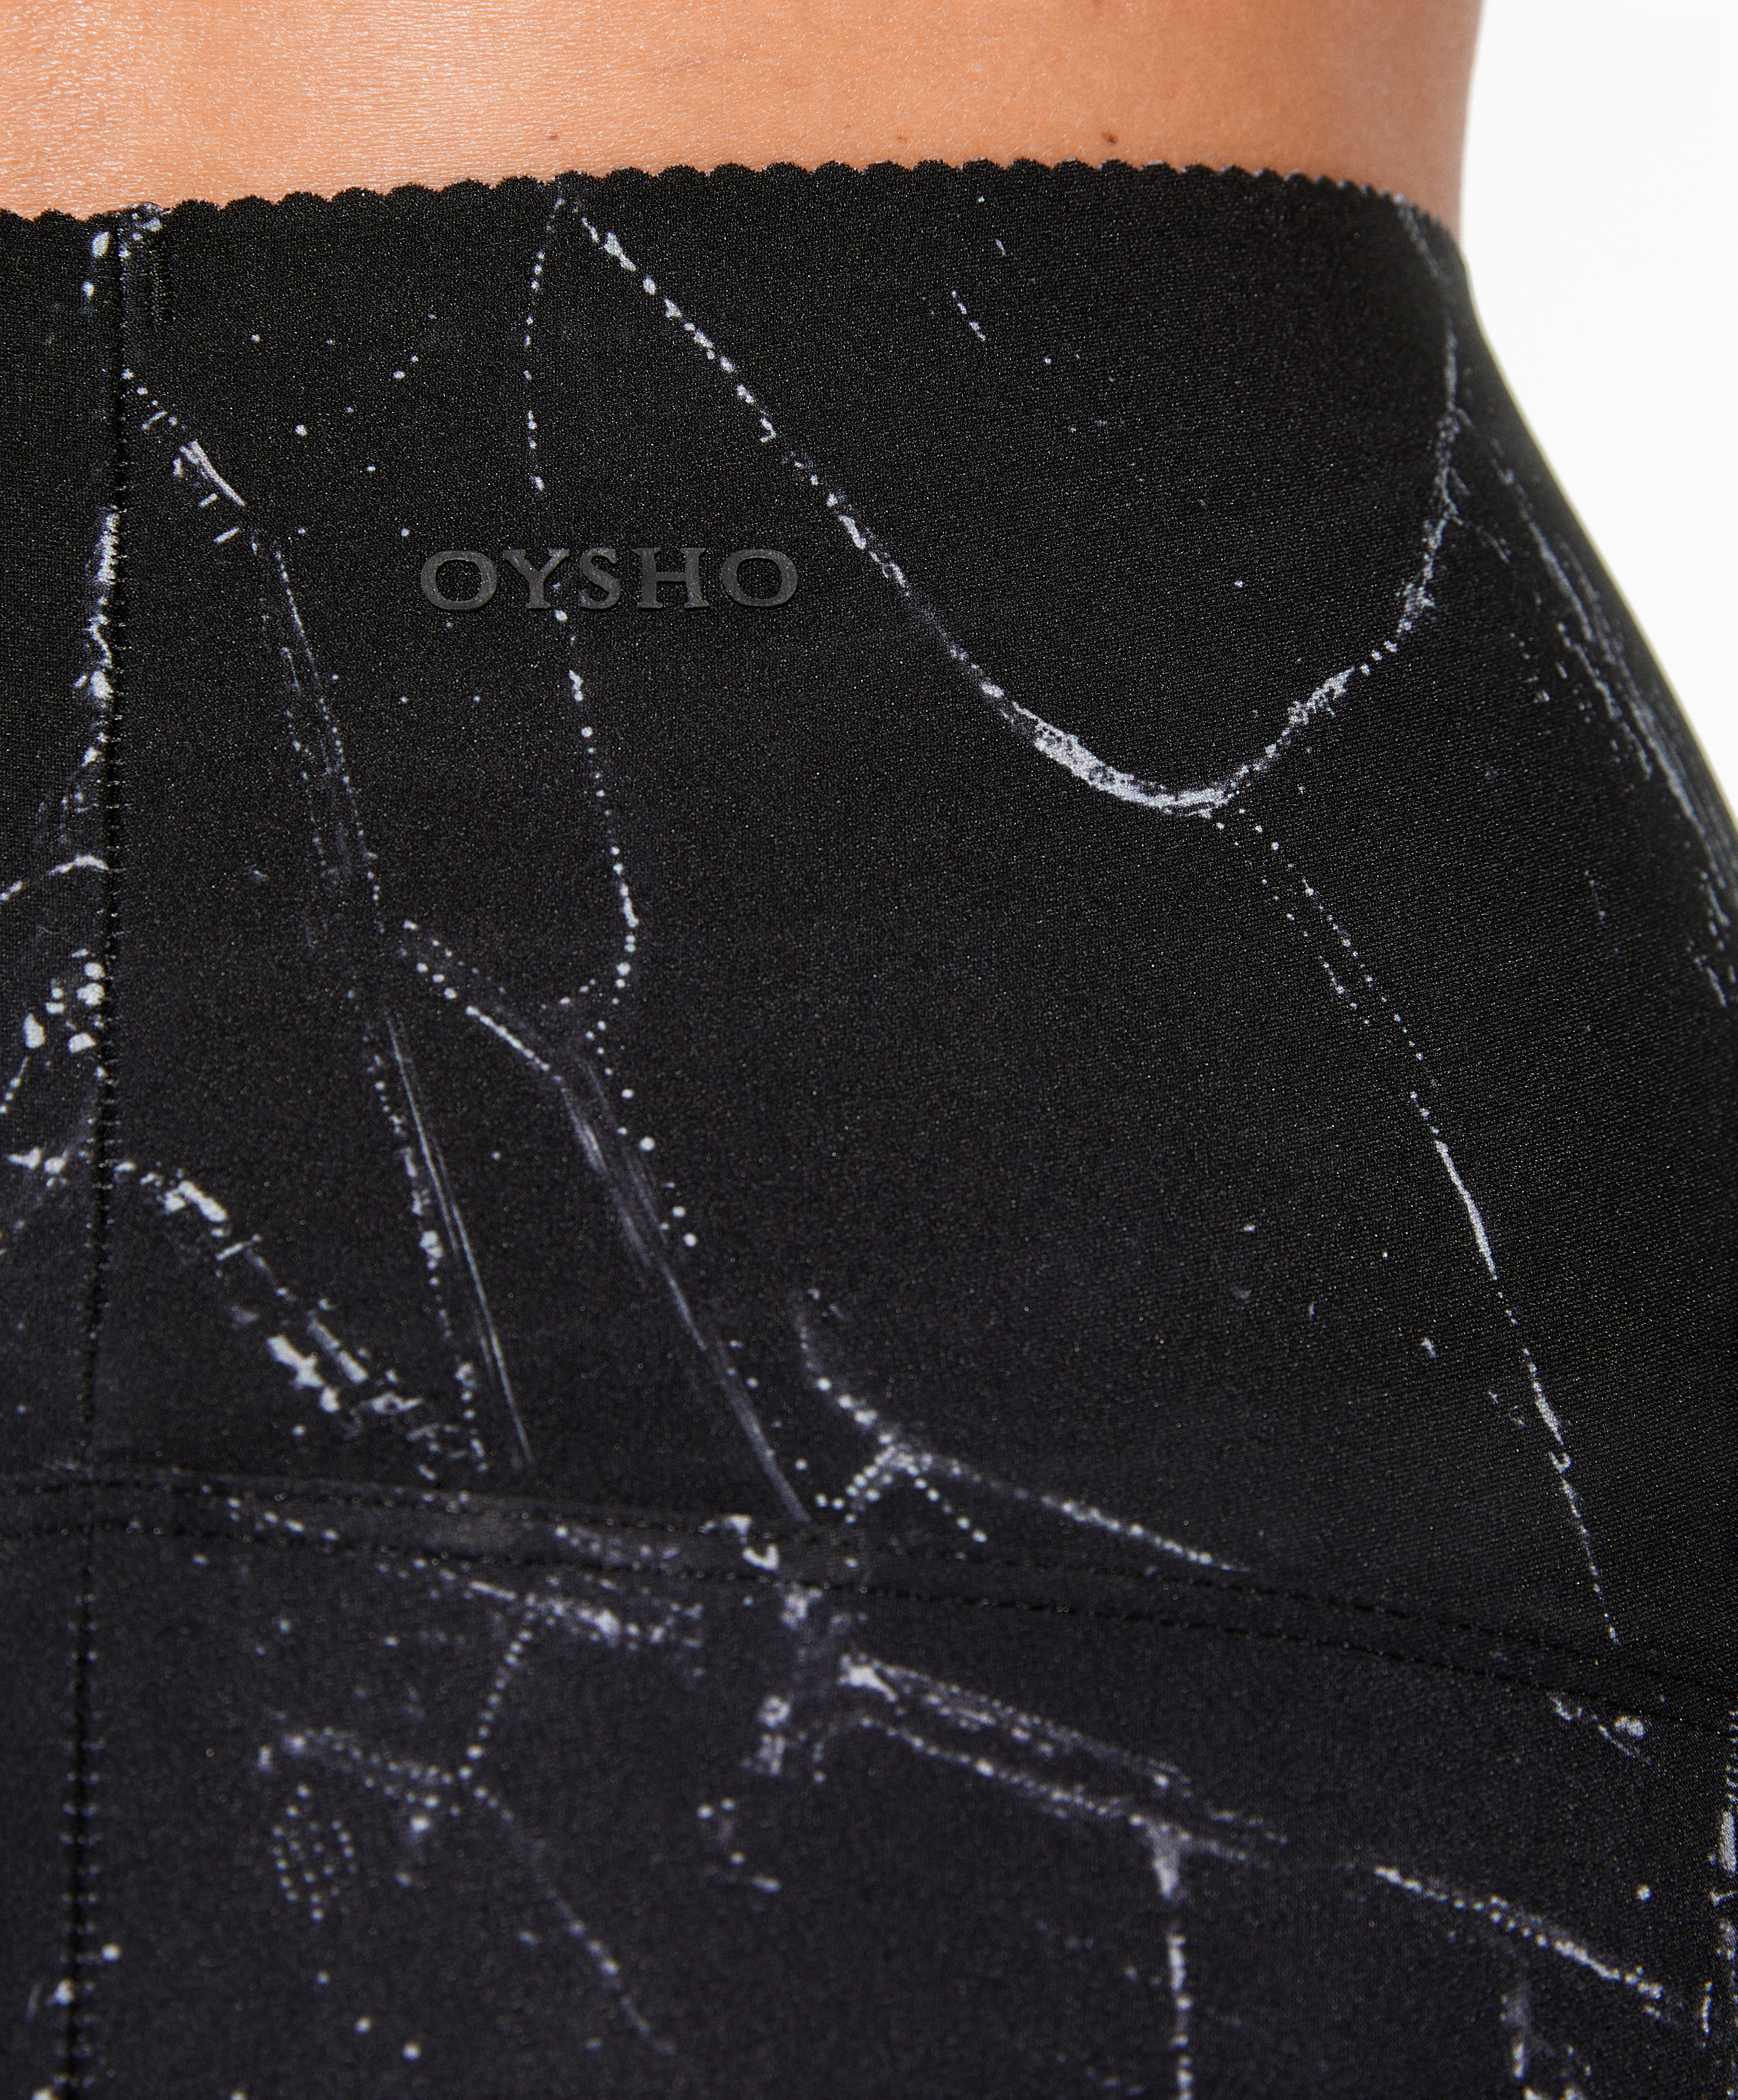 Oysho Basic compressive ankle-length leggings - 136643097-565